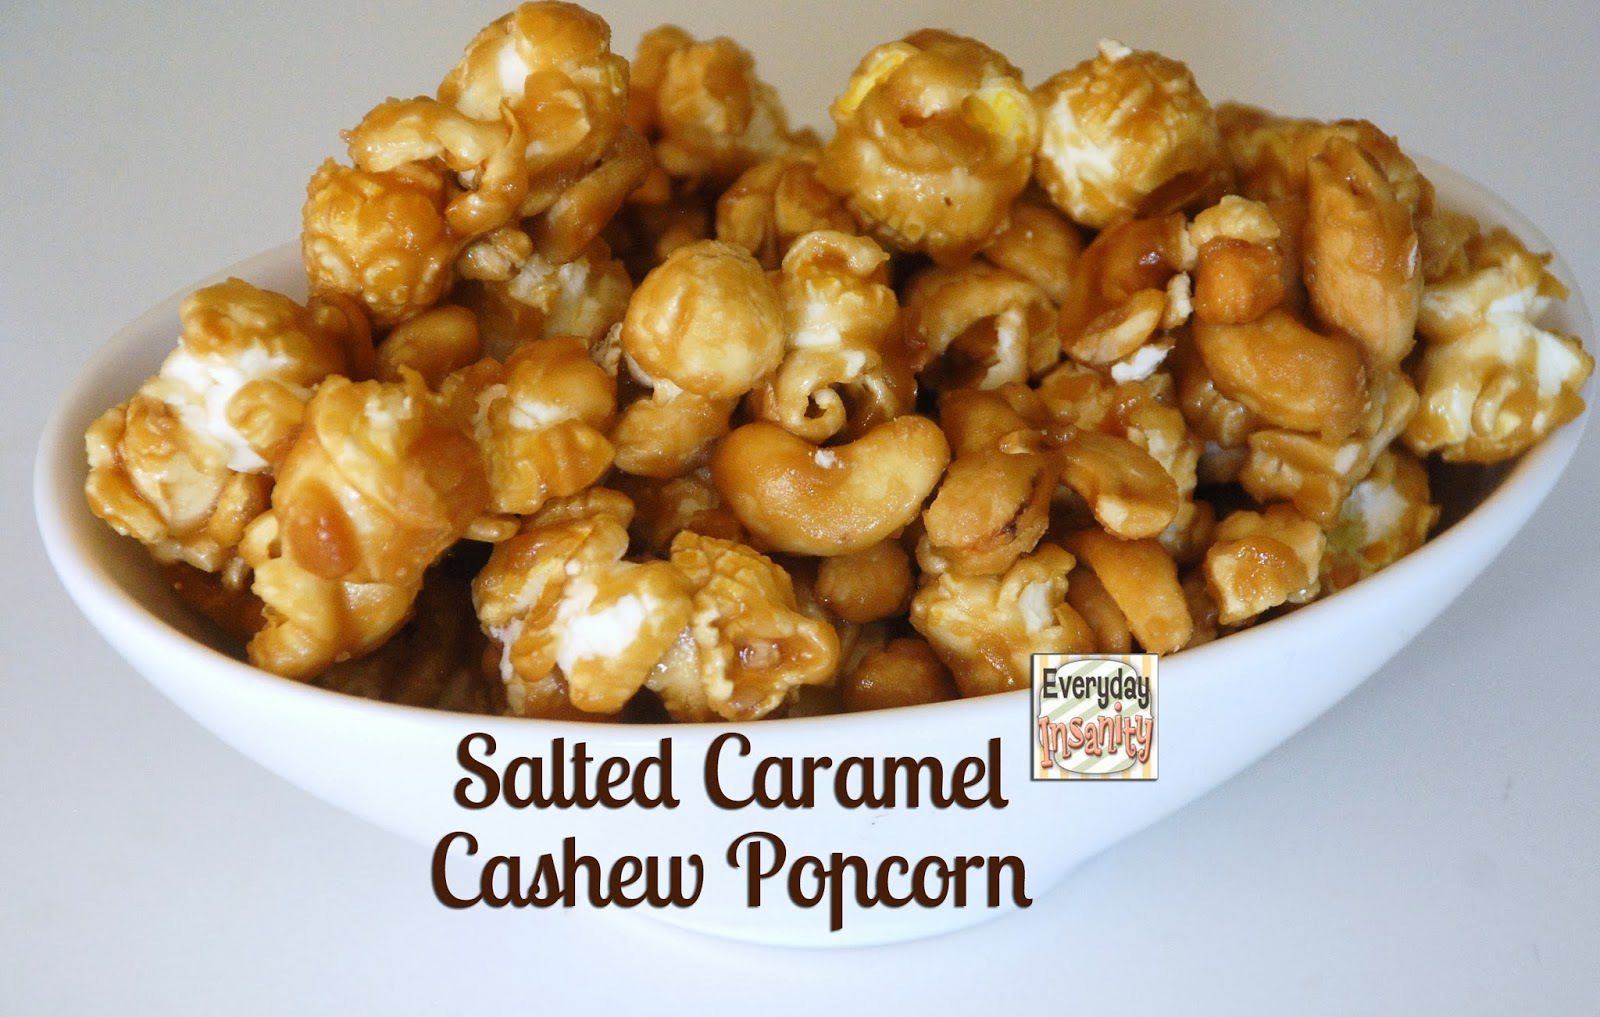 Everyday Insanity... Salted Caramel Cashew Popcorn